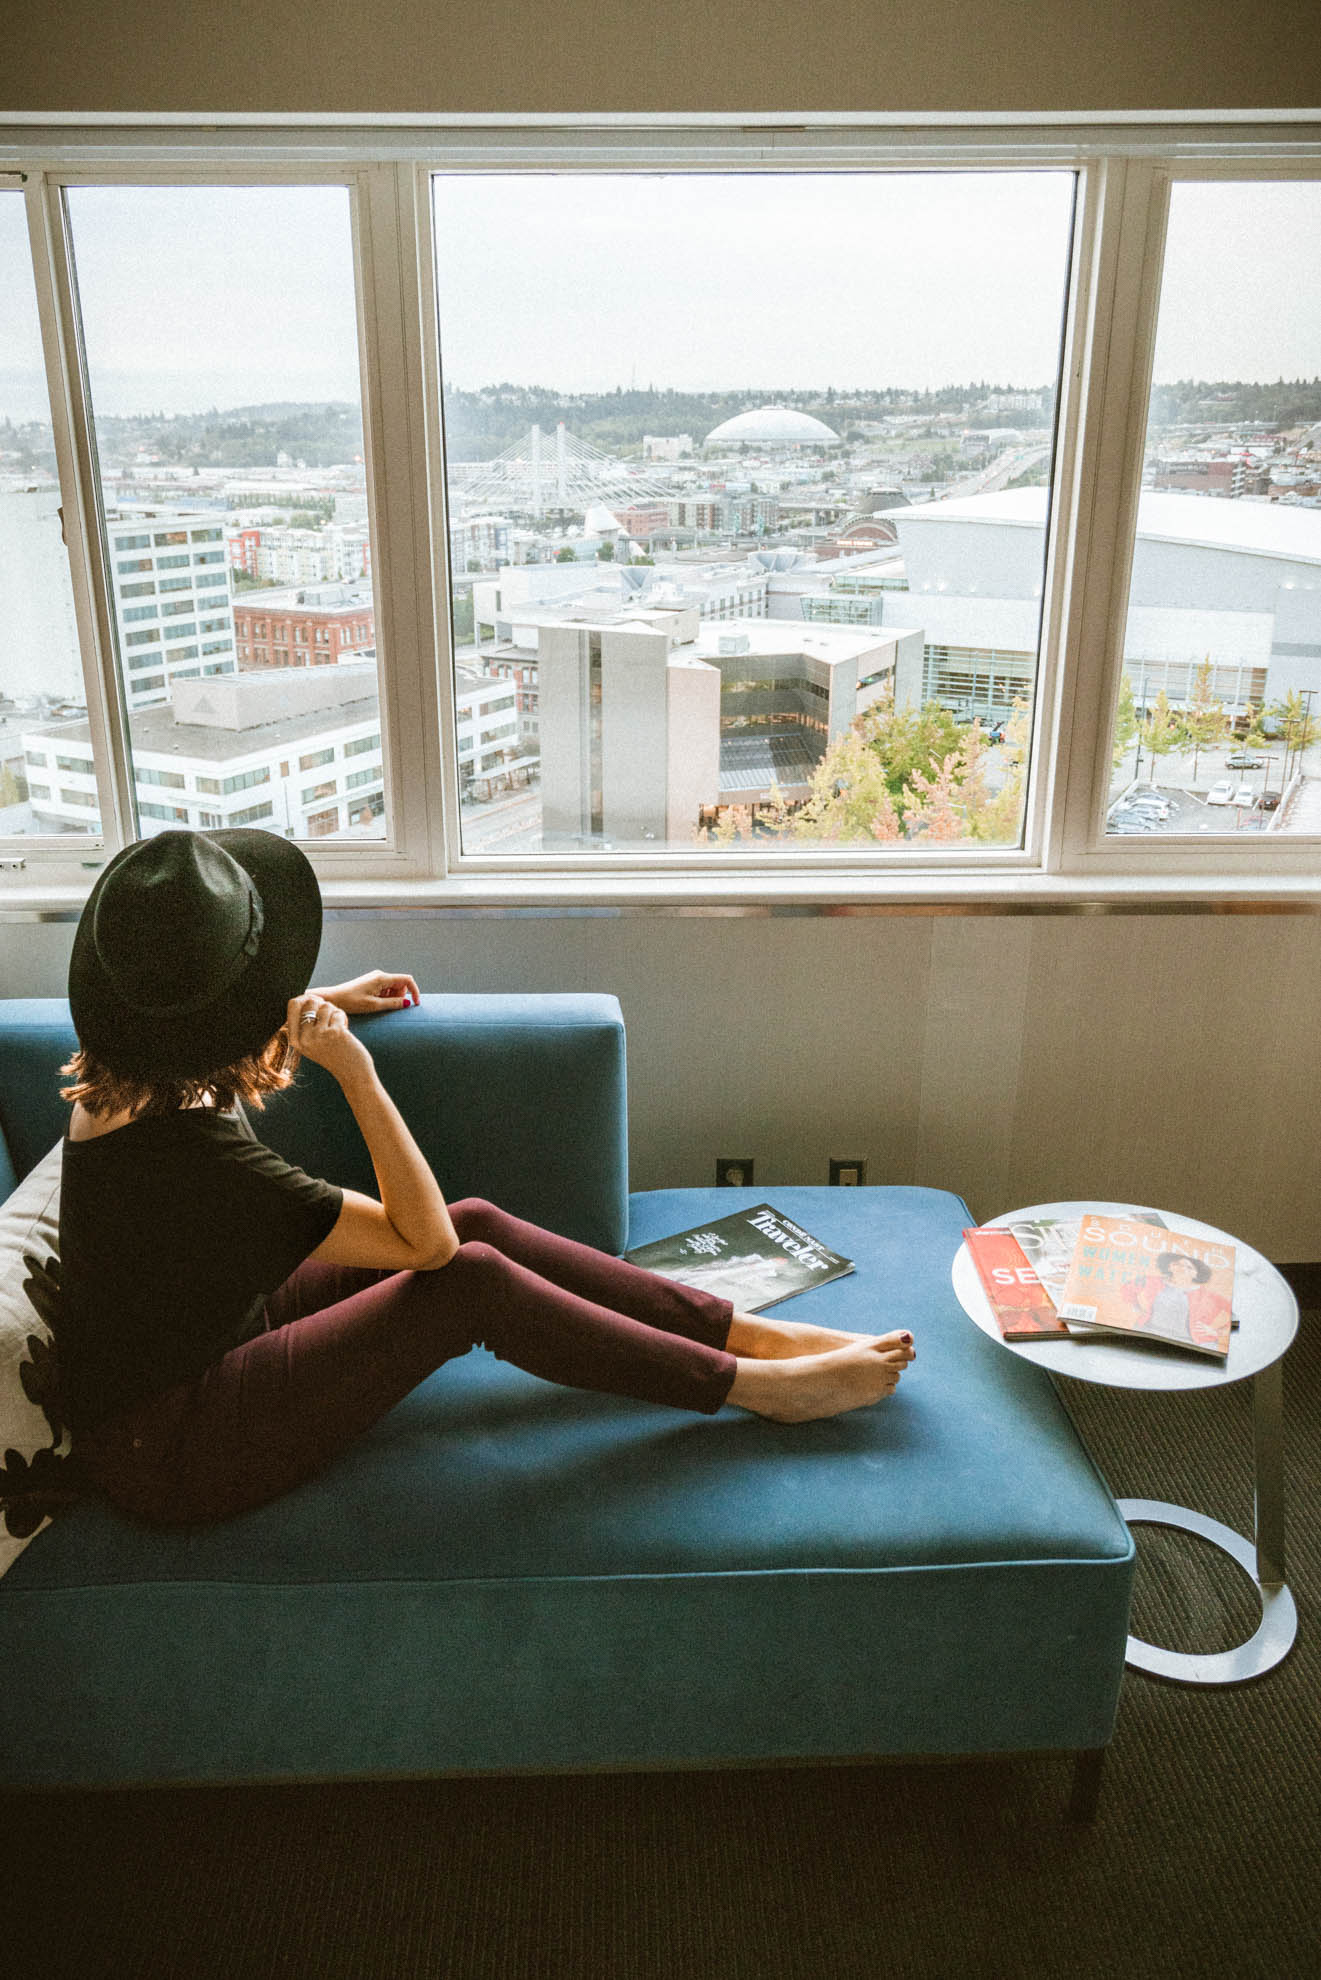 Hotel Murano offers beautiful views of Tacoma, Washington and Mount Rainier.